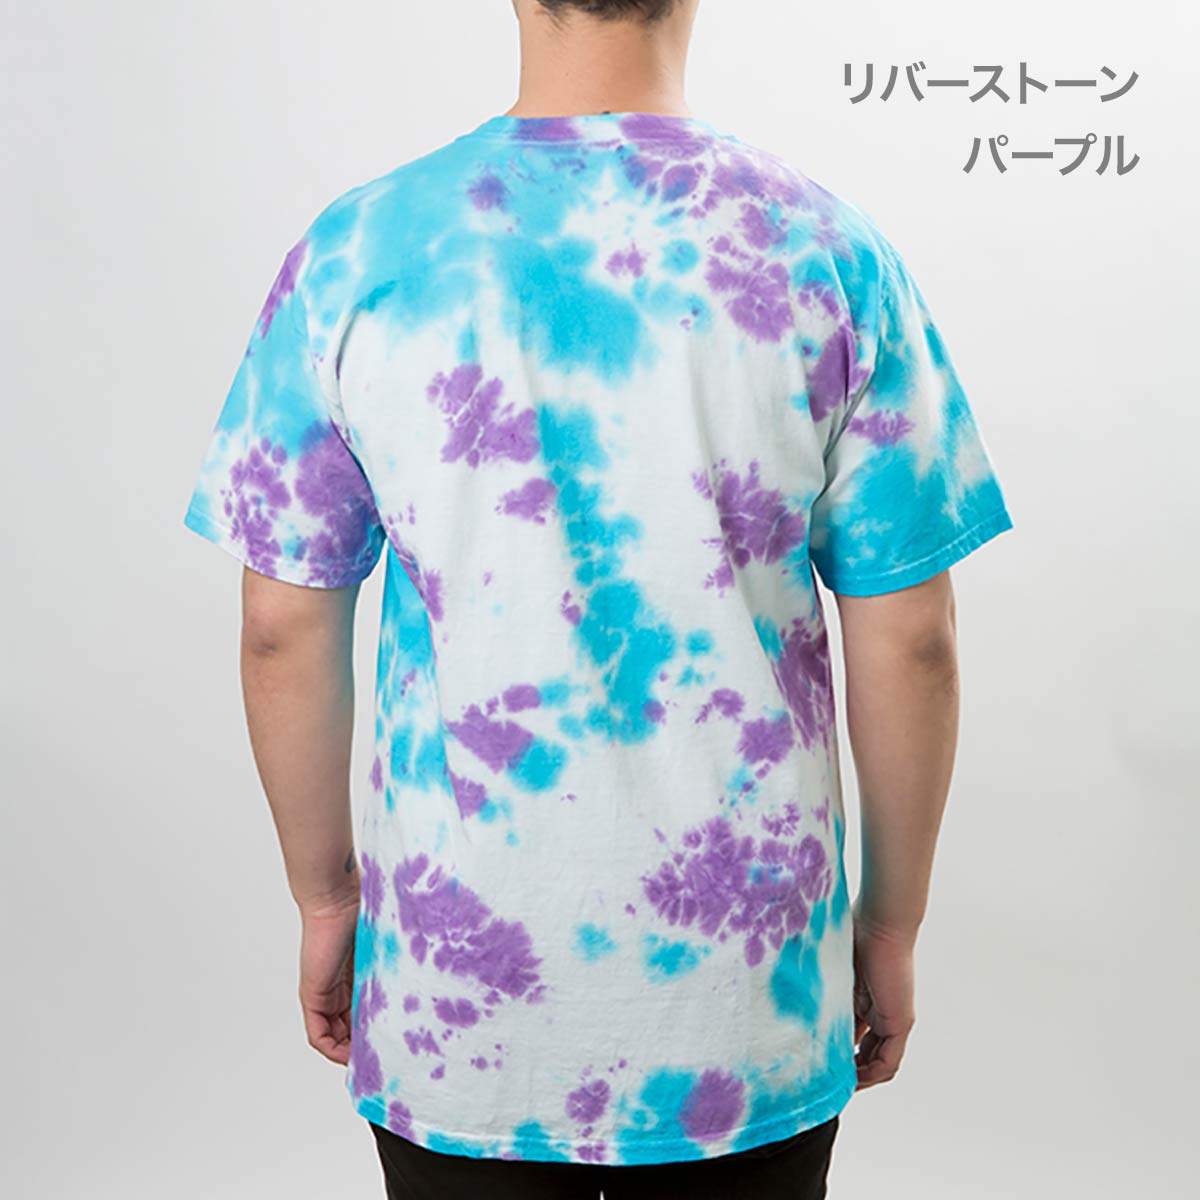 6.0 oz ジャパンエクスクルーシヴTシャツ | メンズ | 1枚 | JD1001 | リバーストーンパープル